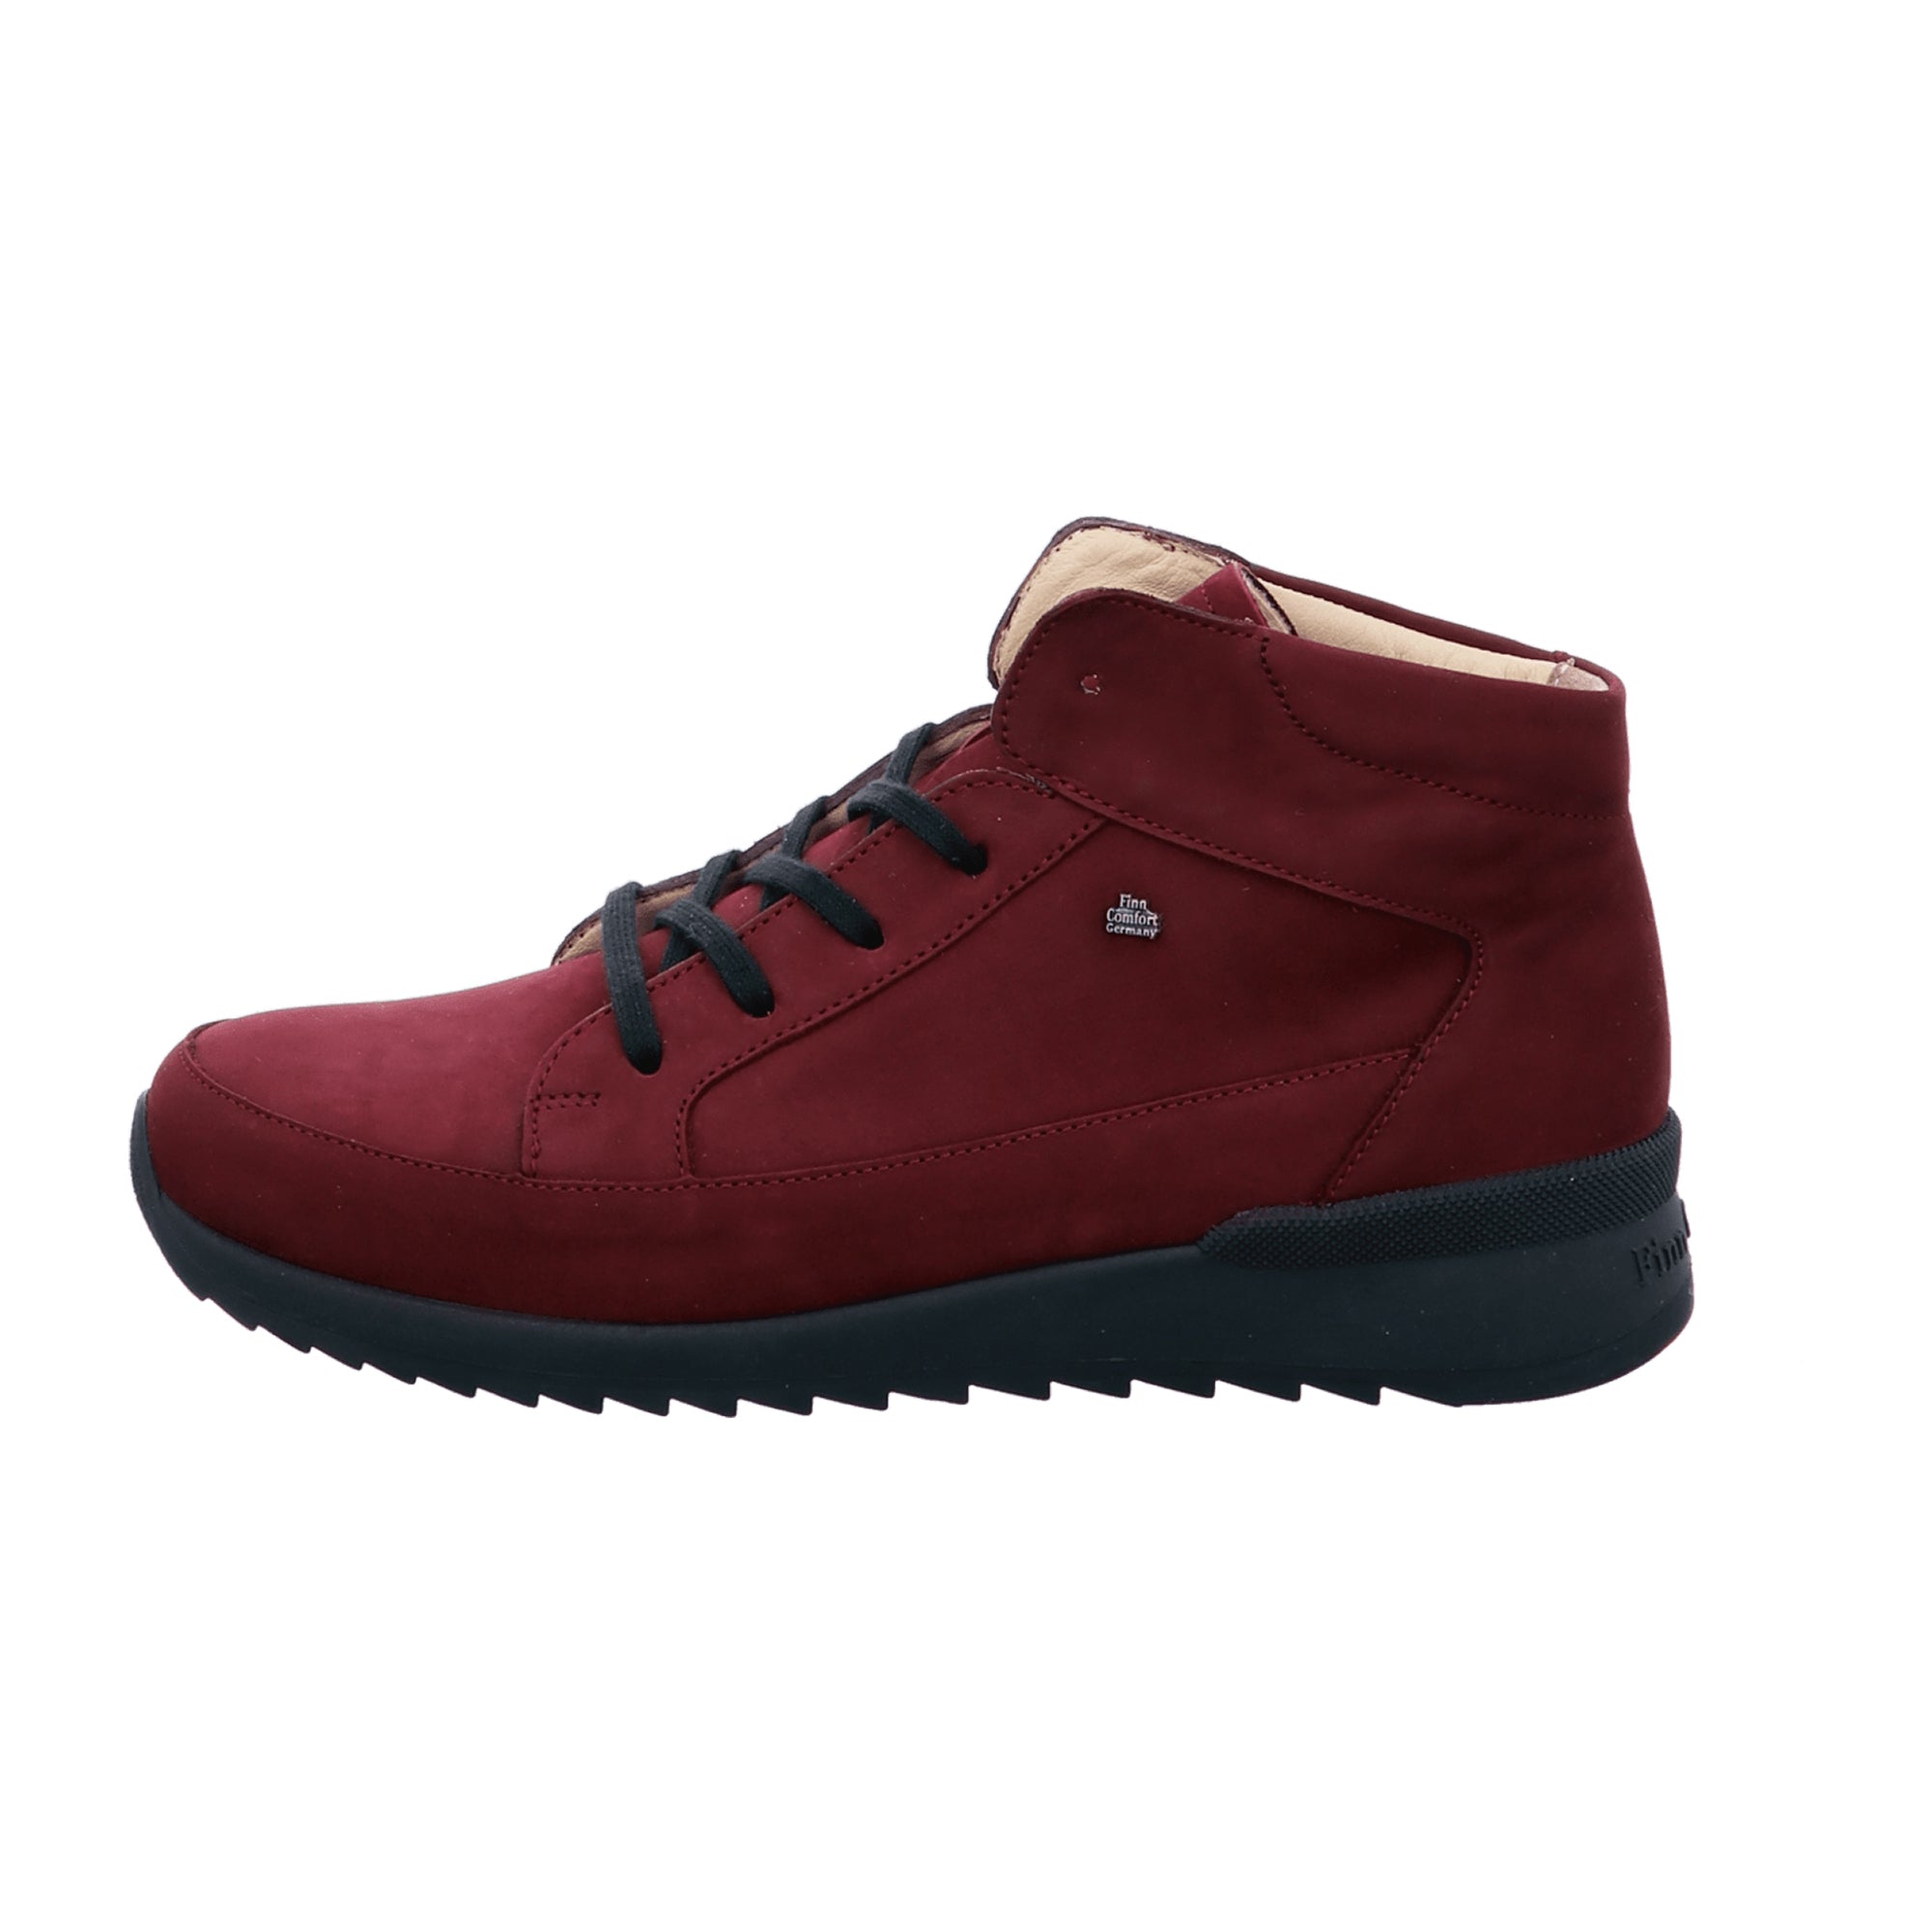 Finn Comfort Burley Redwine Women's Comfort Shoes - Stylish Red